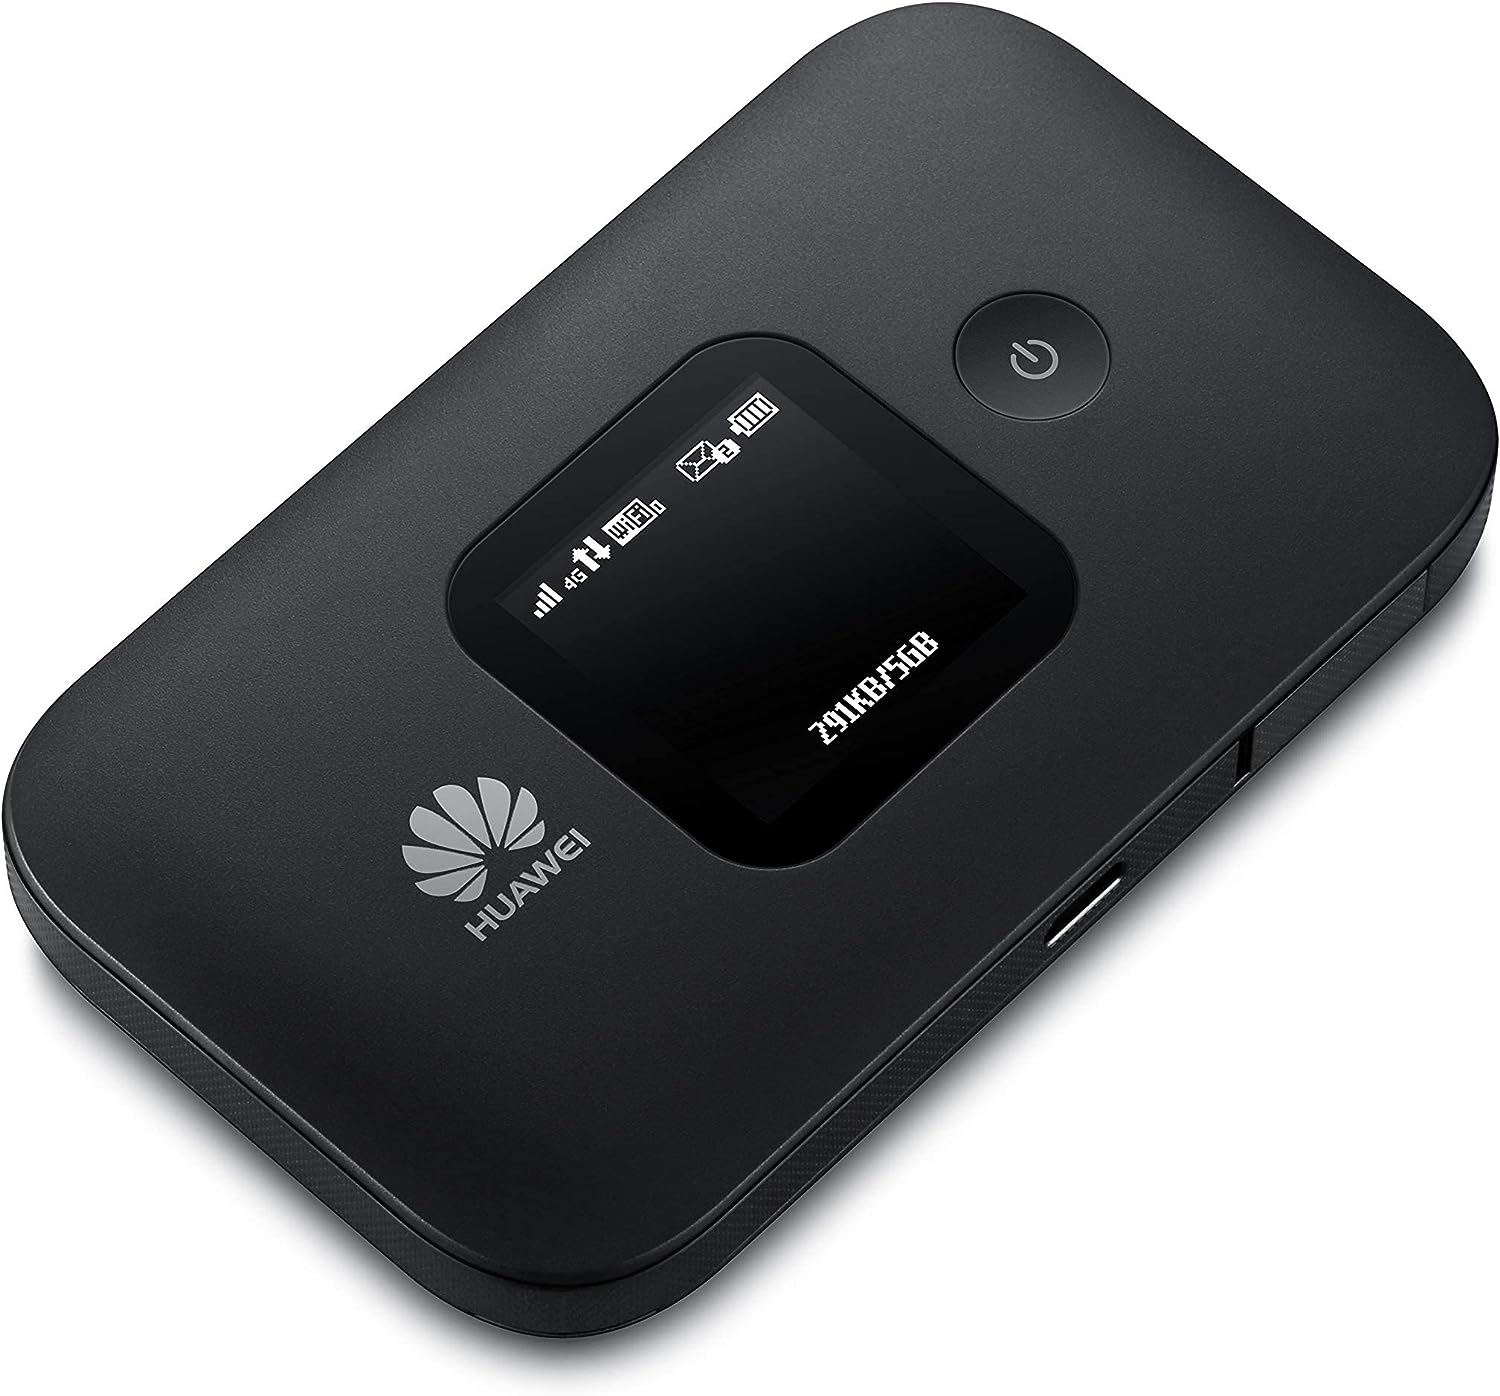 Unlocked Huawei E5577-320 LTE4 Mobile WiFi